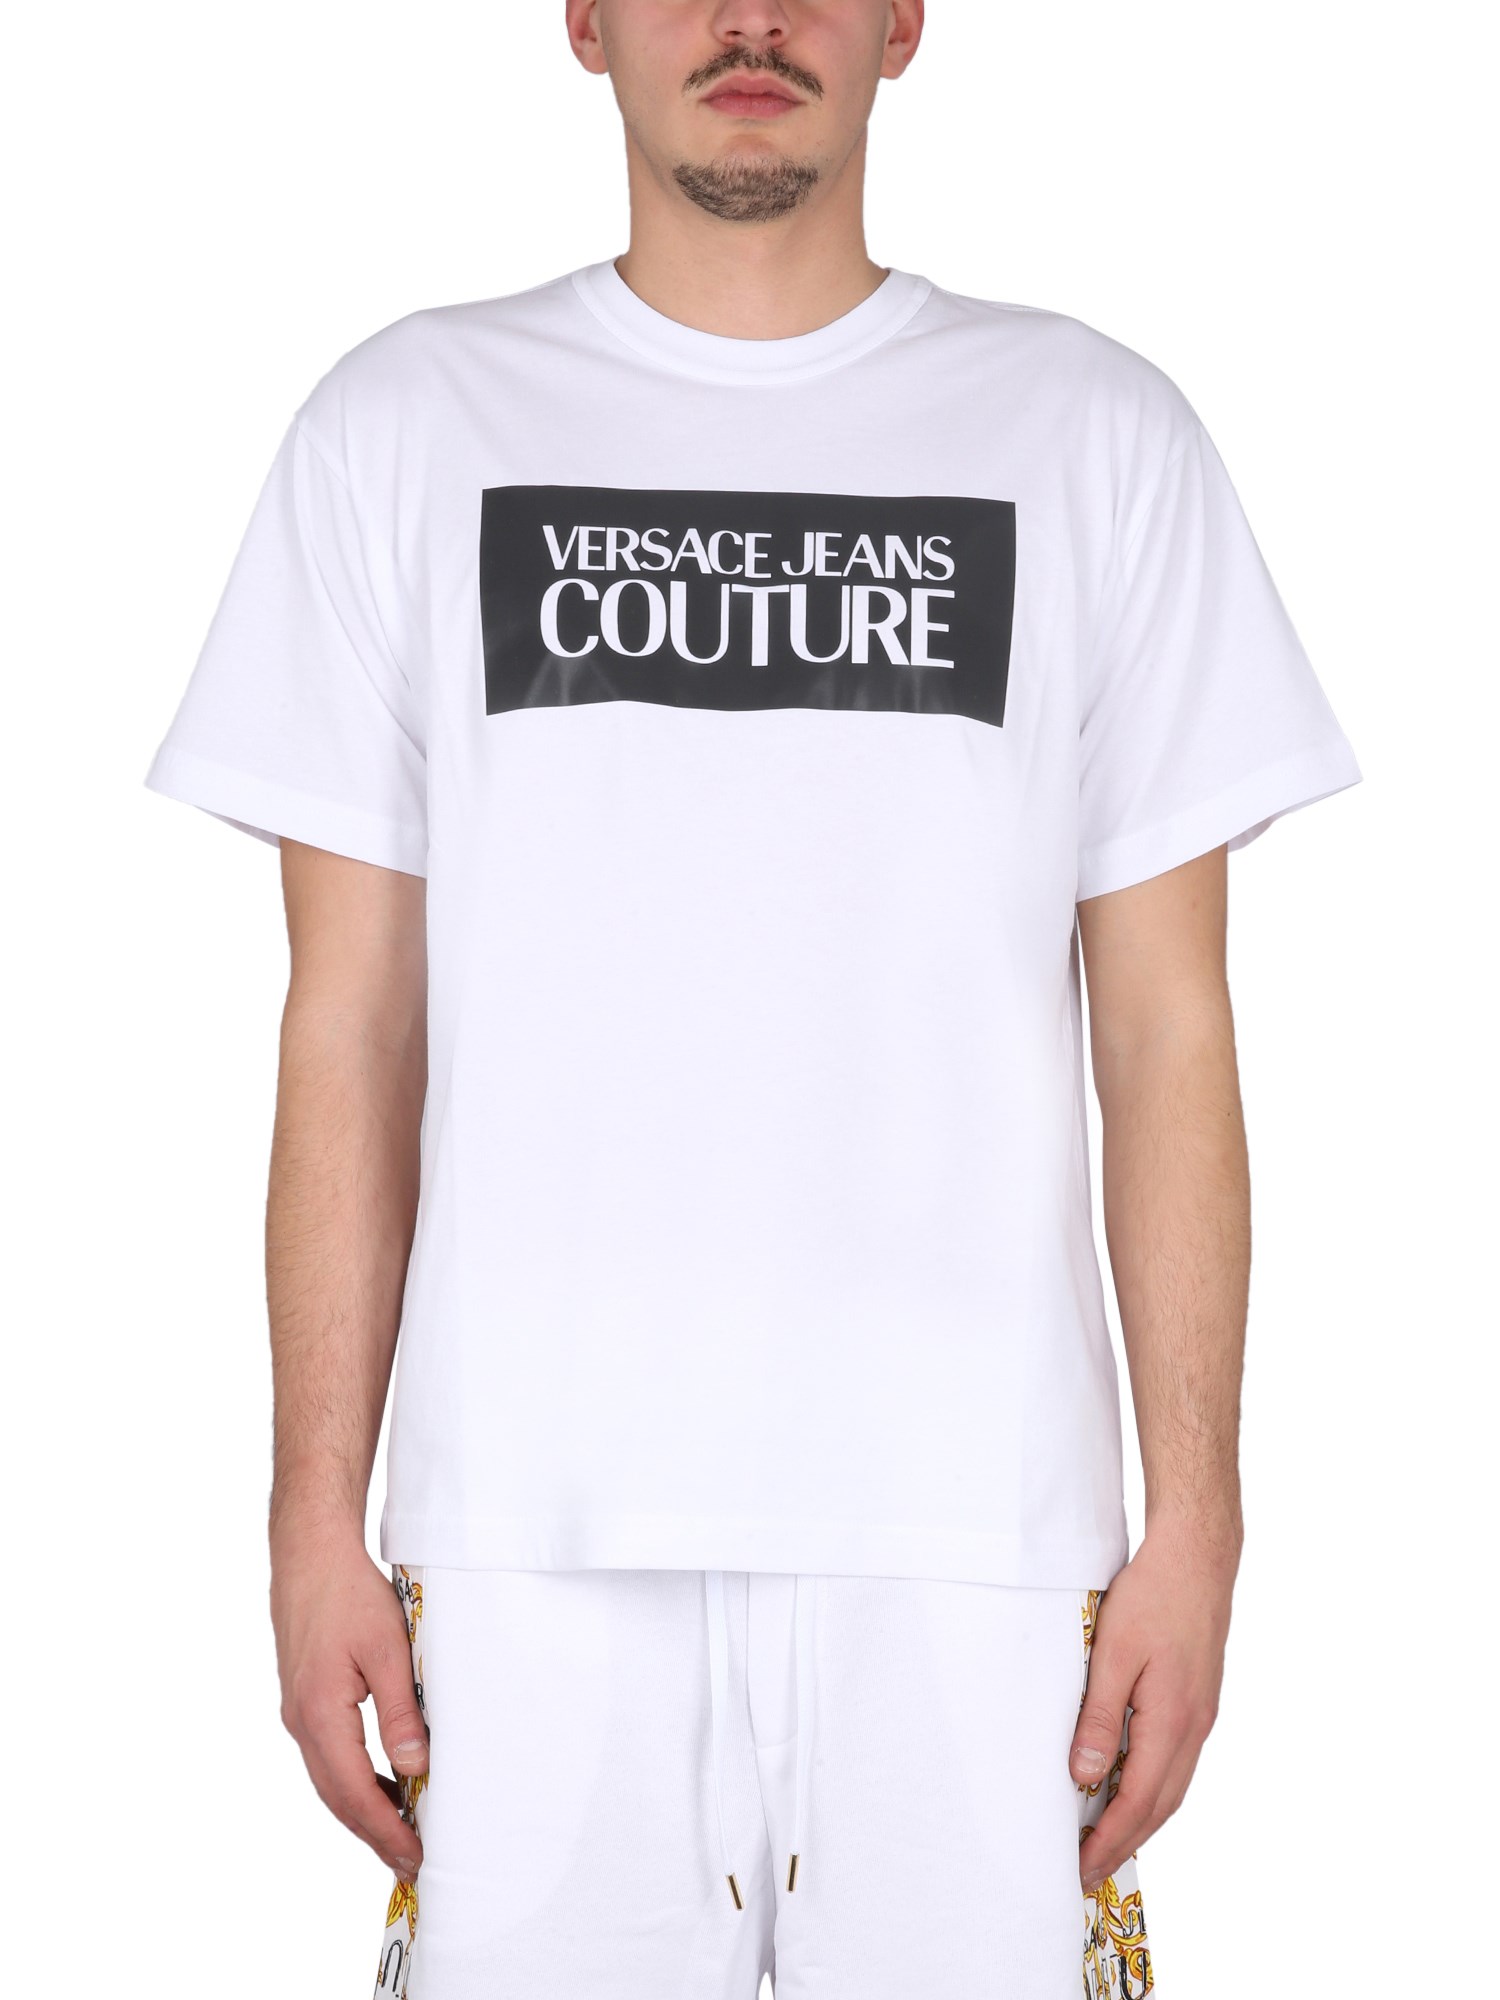 Versace Couture Print T-shirt Bianco/gold/white | islamiyyat.com